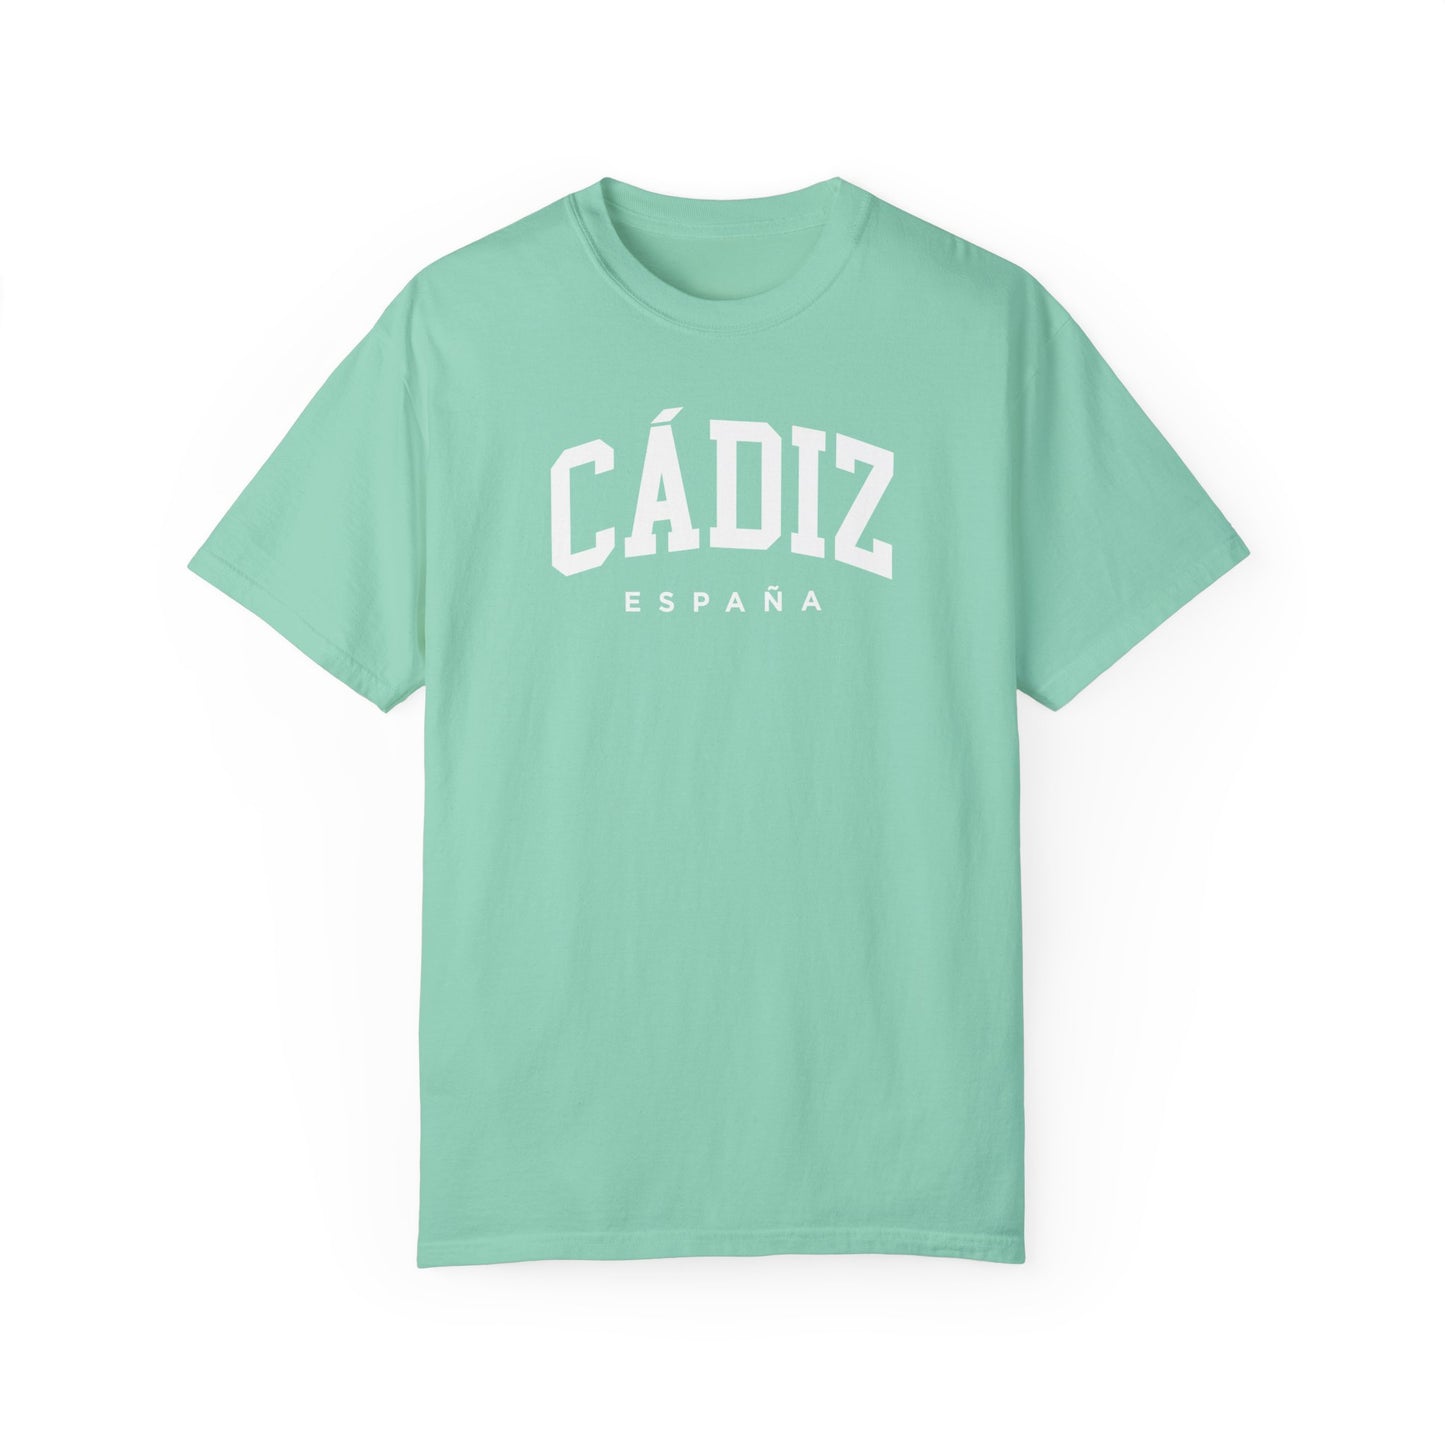 Cádiz Spain Comfort Colors® Tee